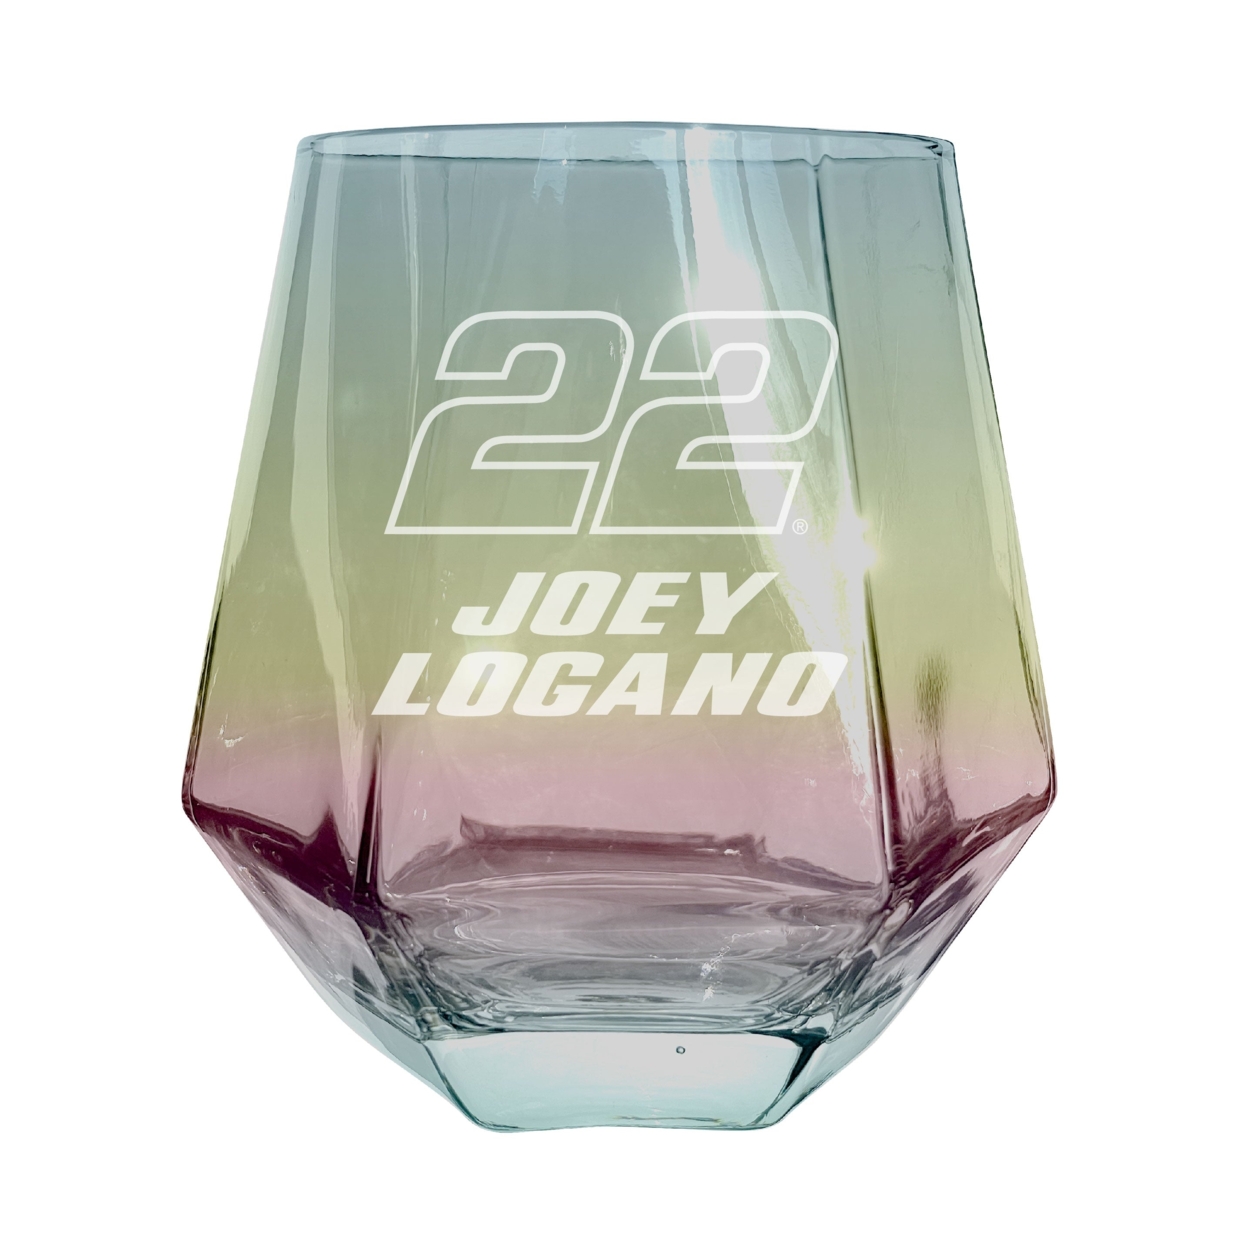 #22 Joey Logano Officially Licensed 10 Oz Engraved Diamond Wine Glass - Grey, Single